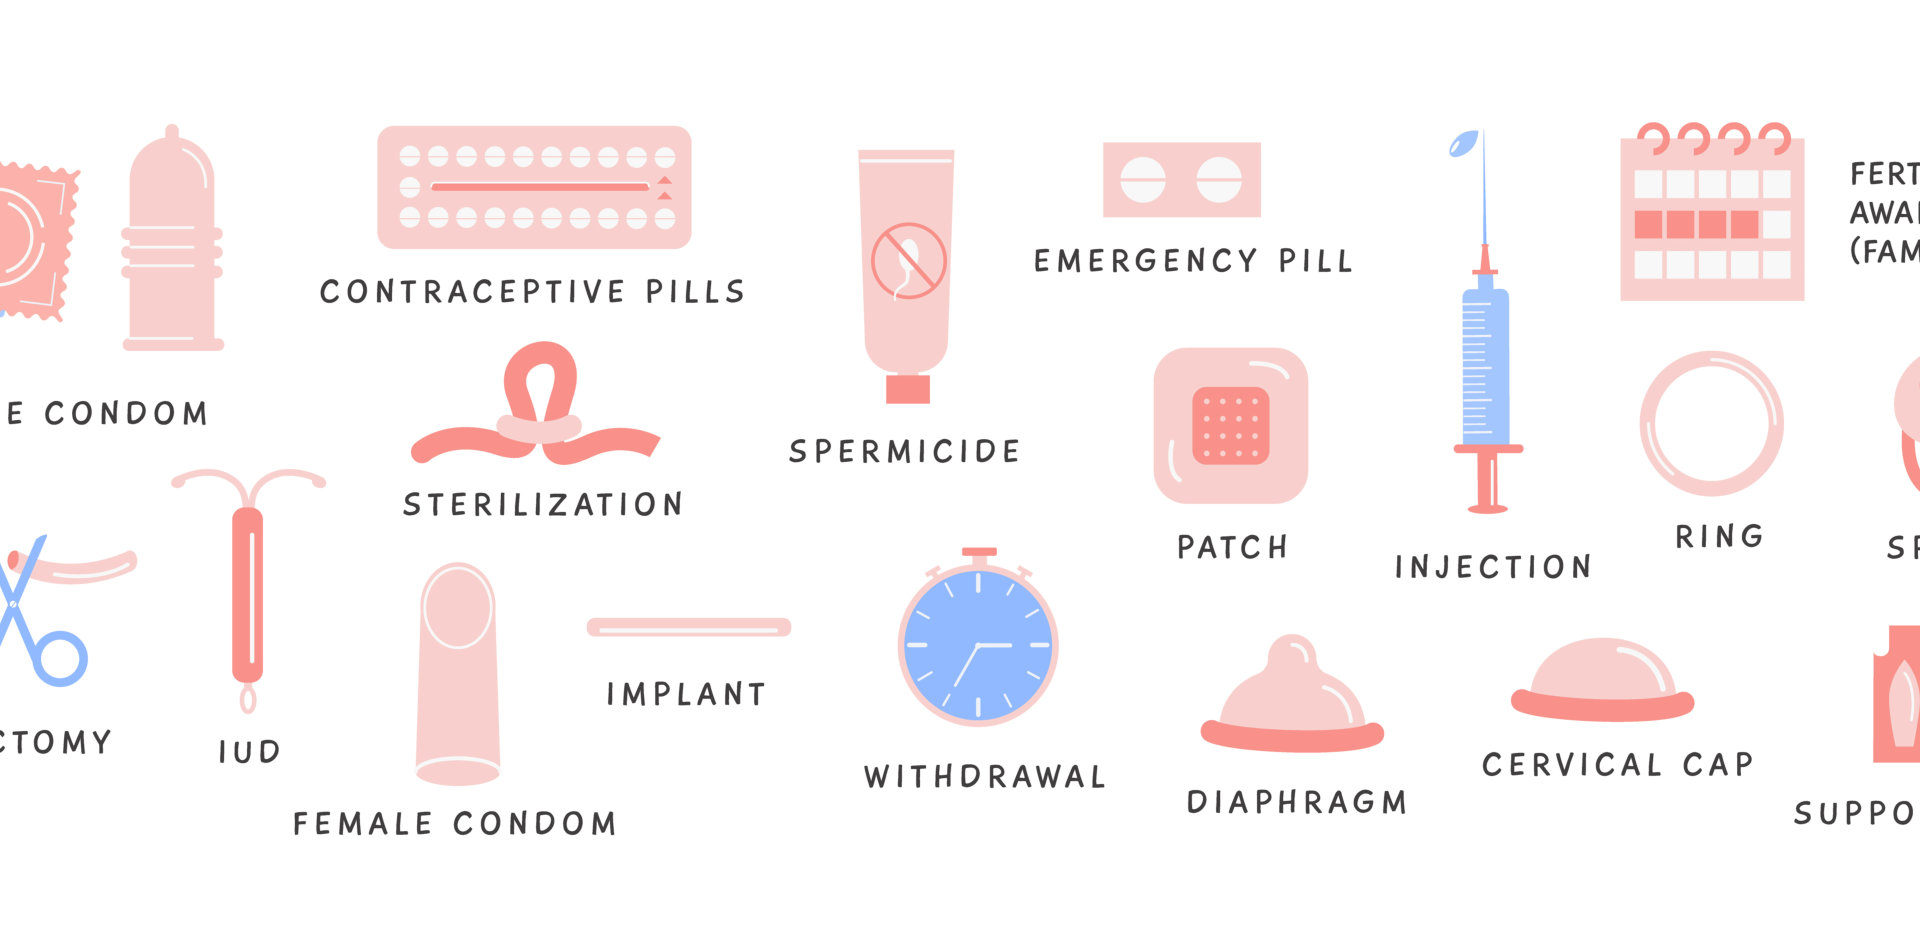 contraceptive pills, sterilization, female condom, implant, spermicide, withdrawal, patch